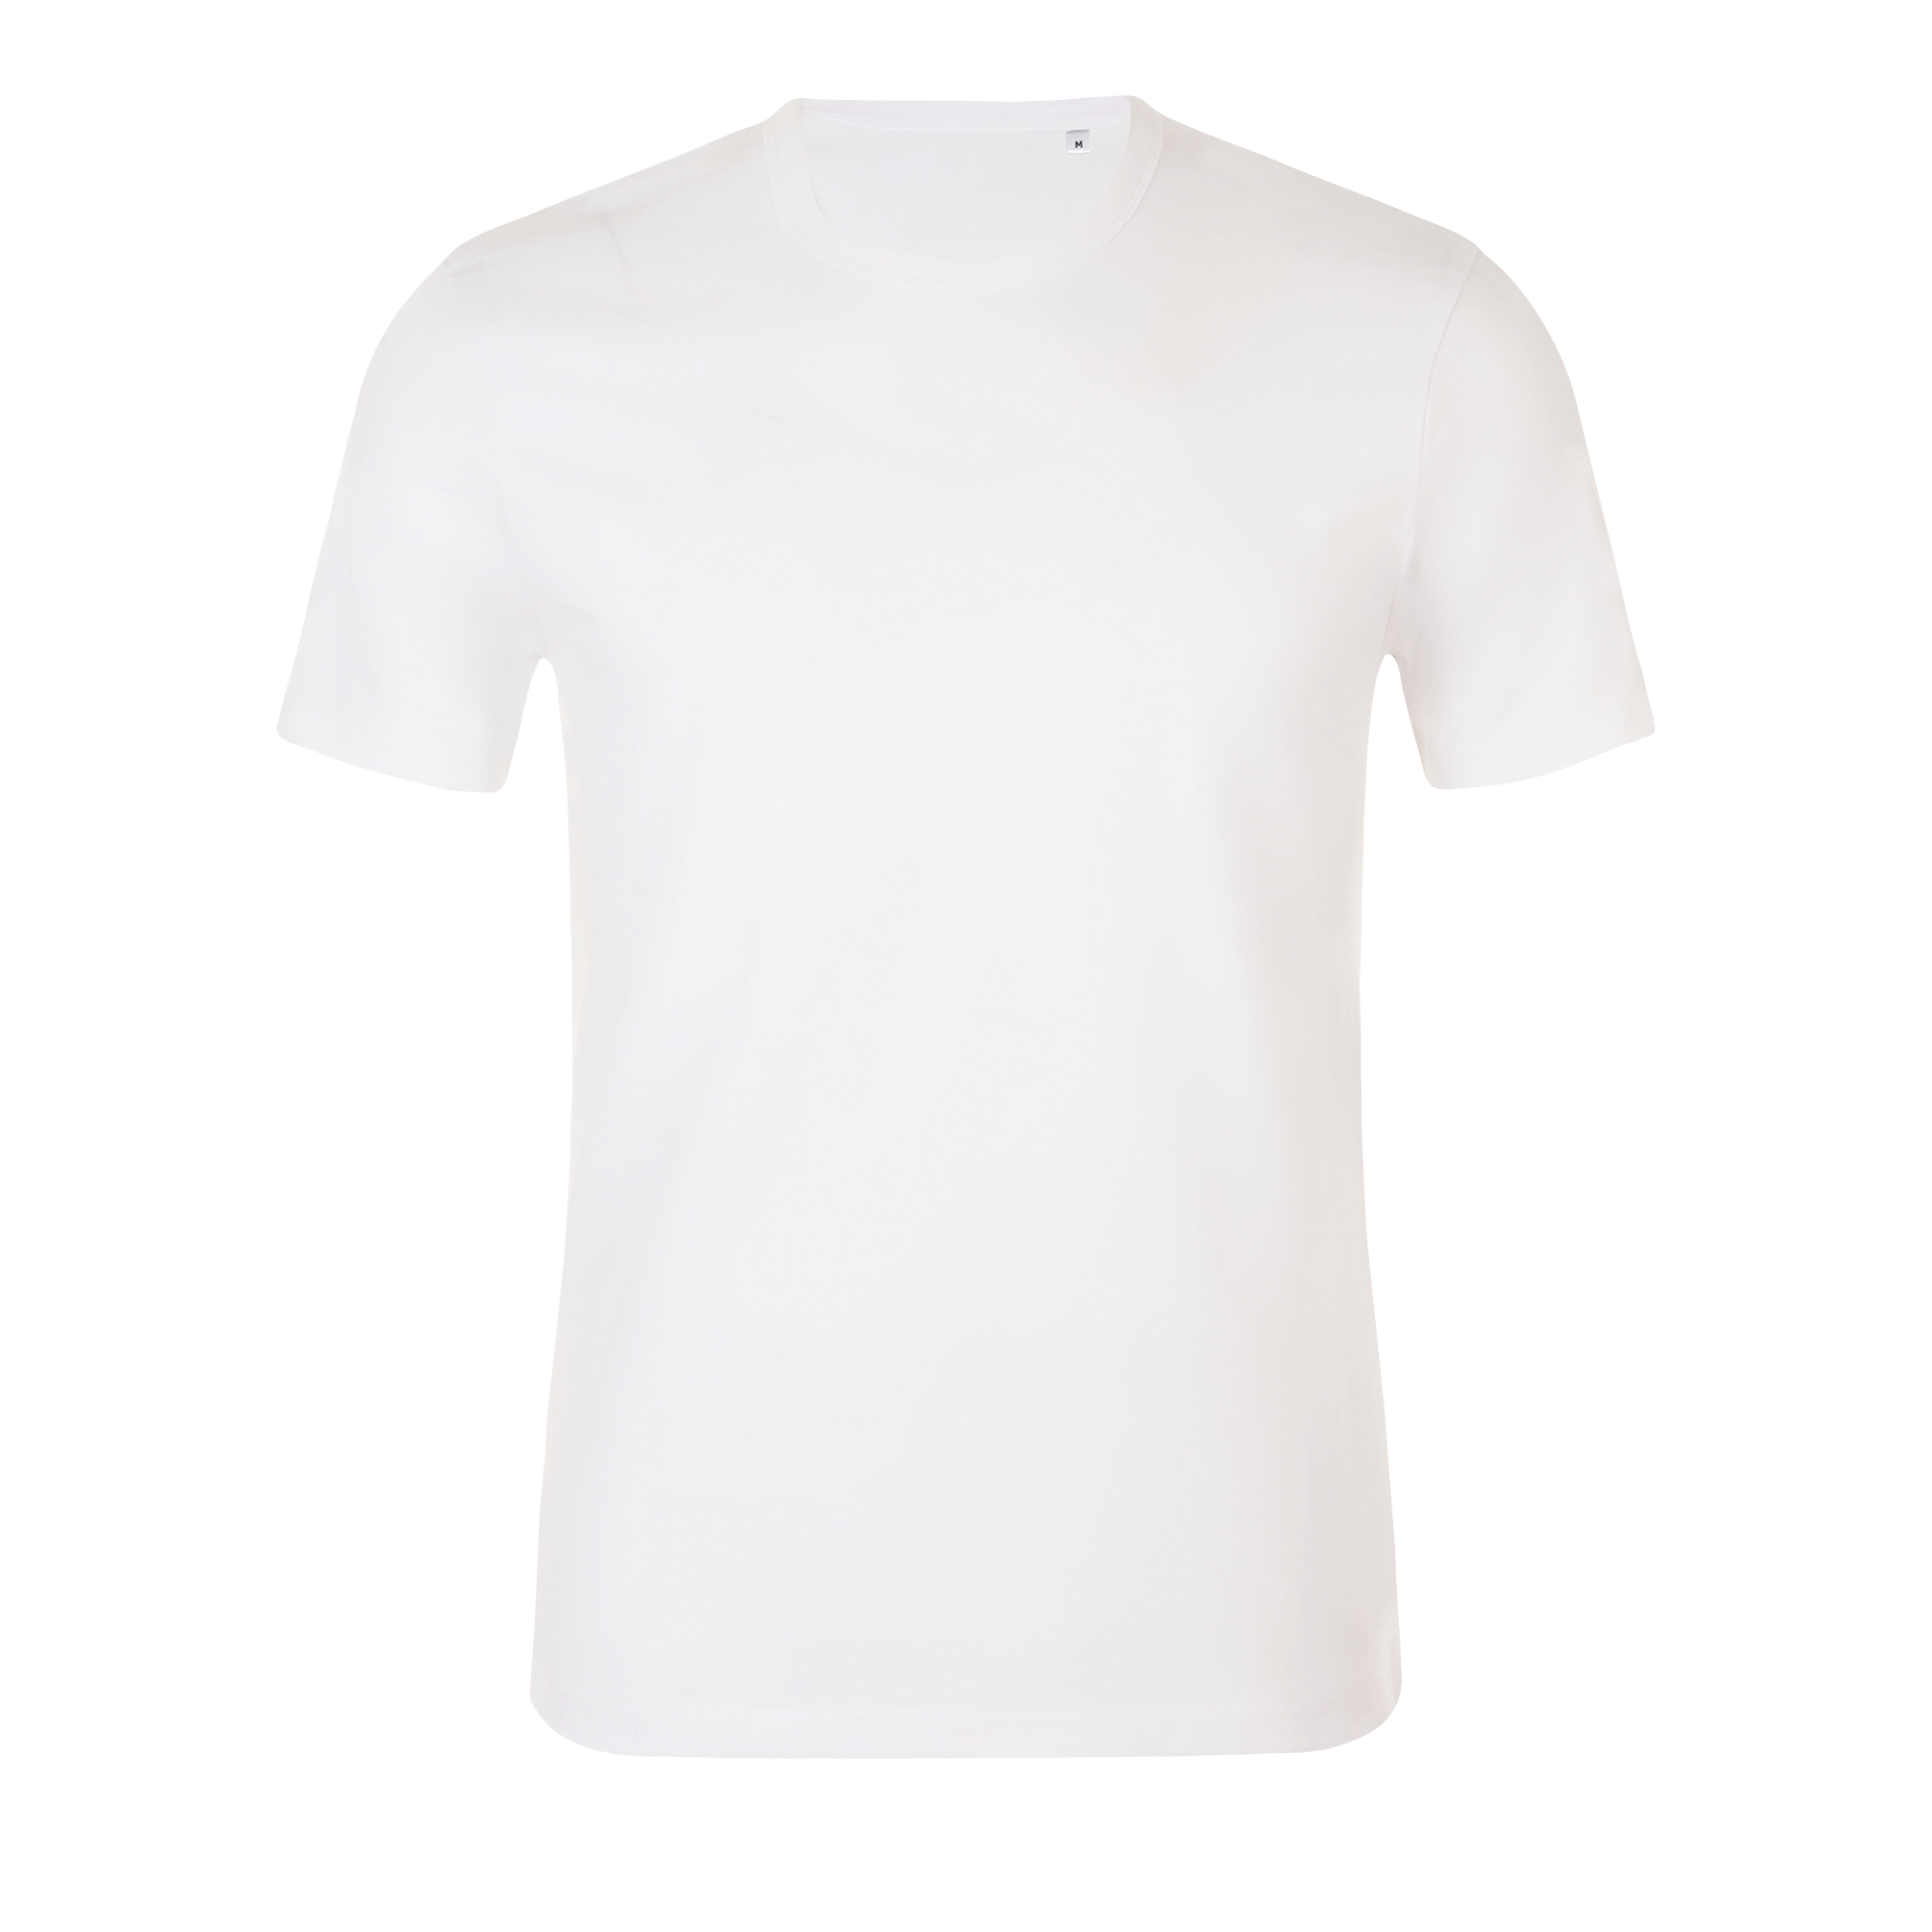 tee shirt blanc